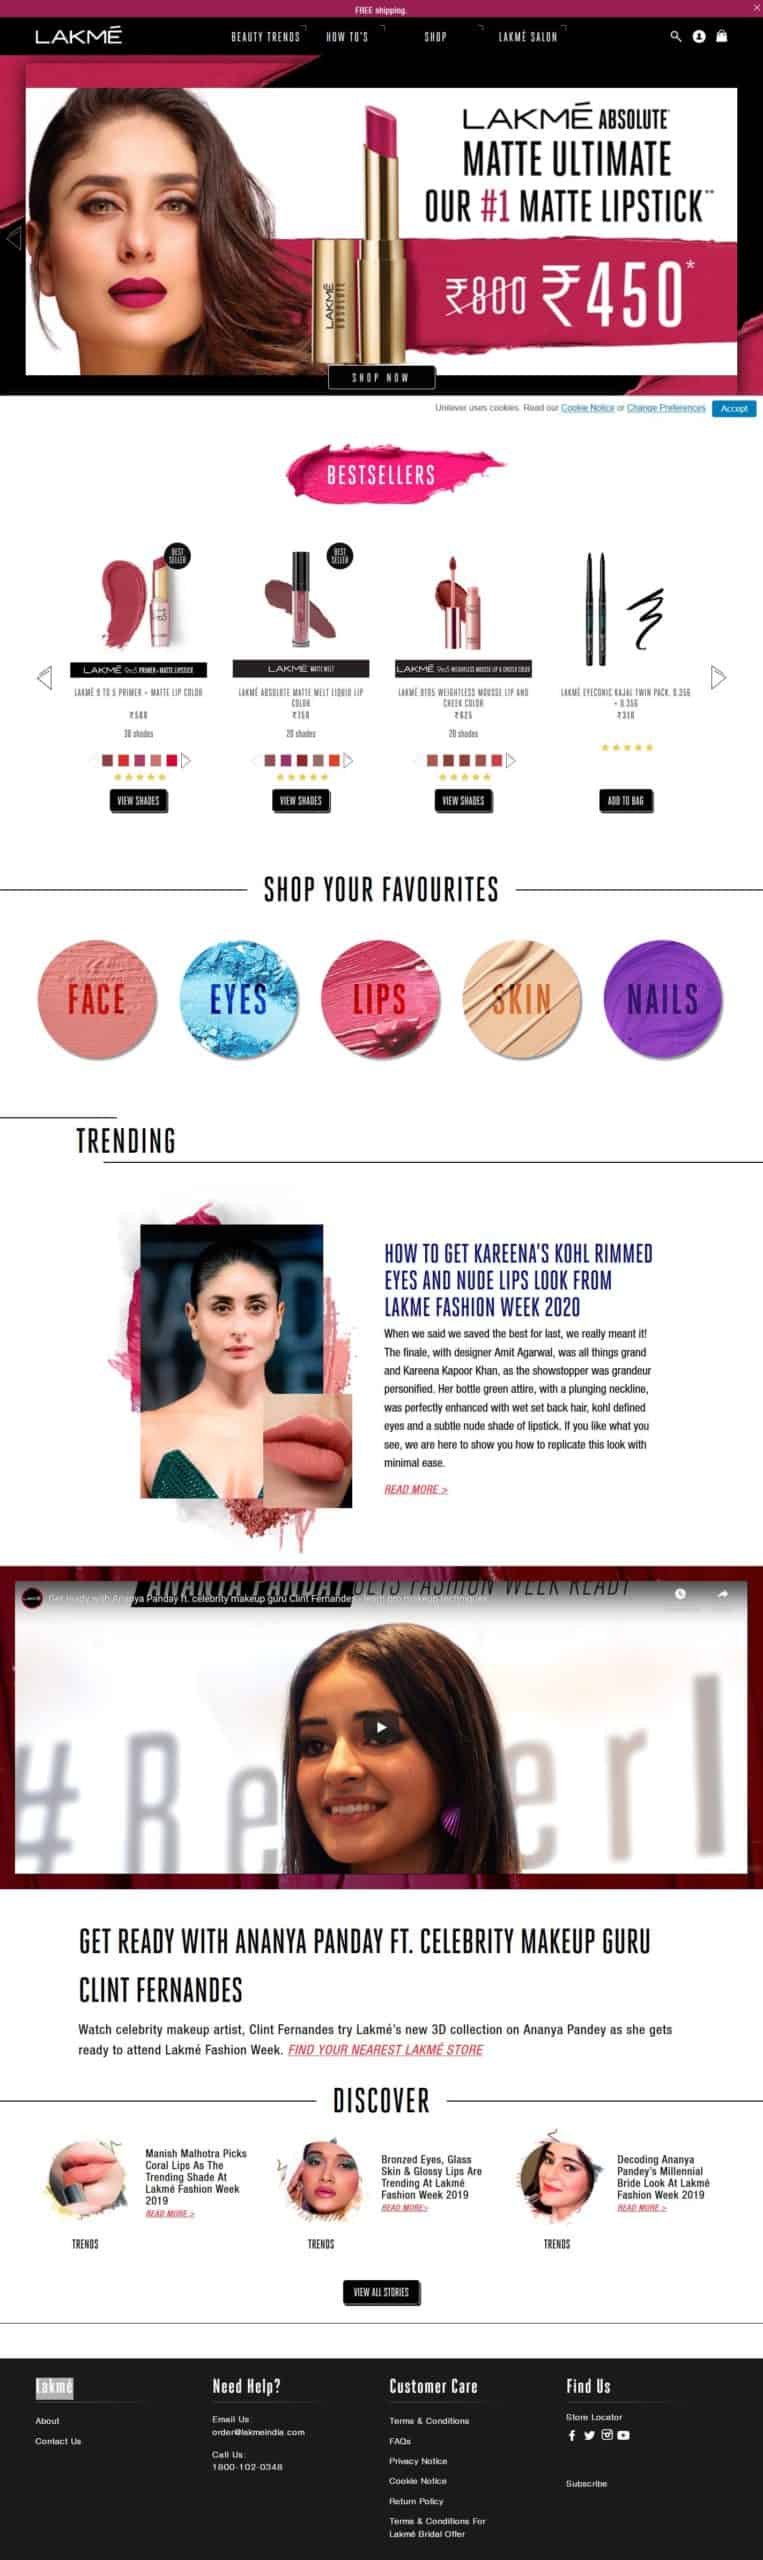 Lakme Website screenshot Professional Cosmetic & Beauty Online Shop | Uddfel Technologies Limited